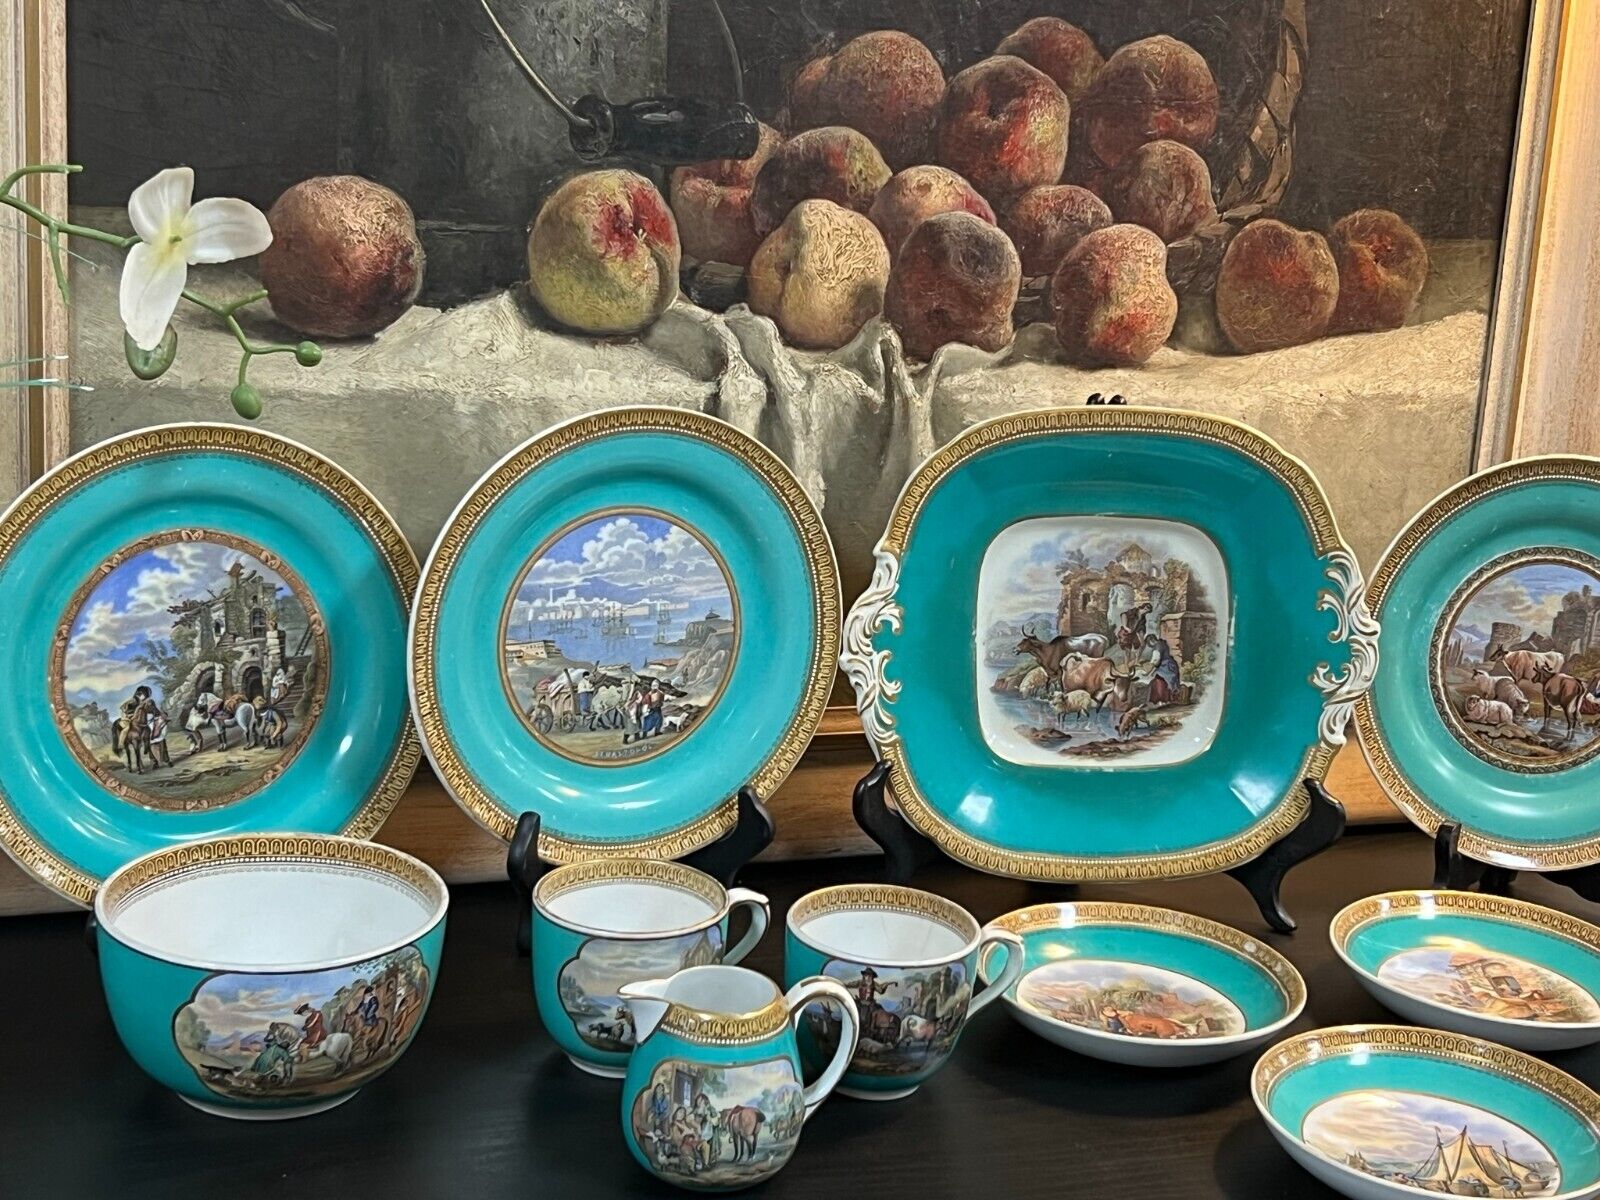 1850-60s F & R Pratt Crimean War Commemorative Scenic Plates, Cups and Saucers, 